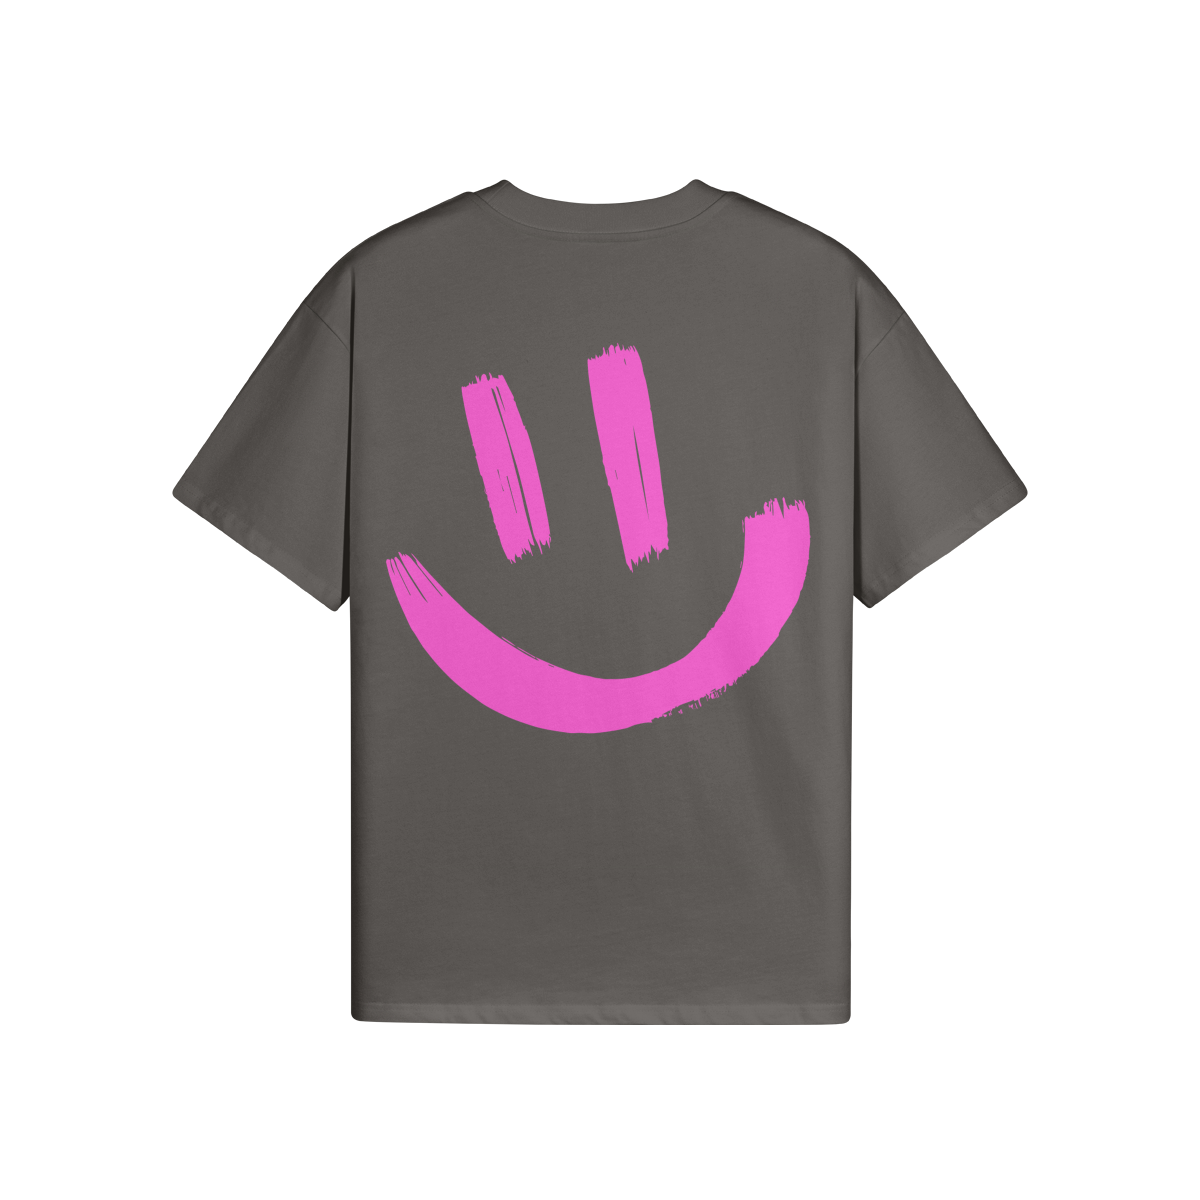 $MILE M. (BACK PRINT) - Unisex Oversized T-shirt - Back - Charcoal Gray